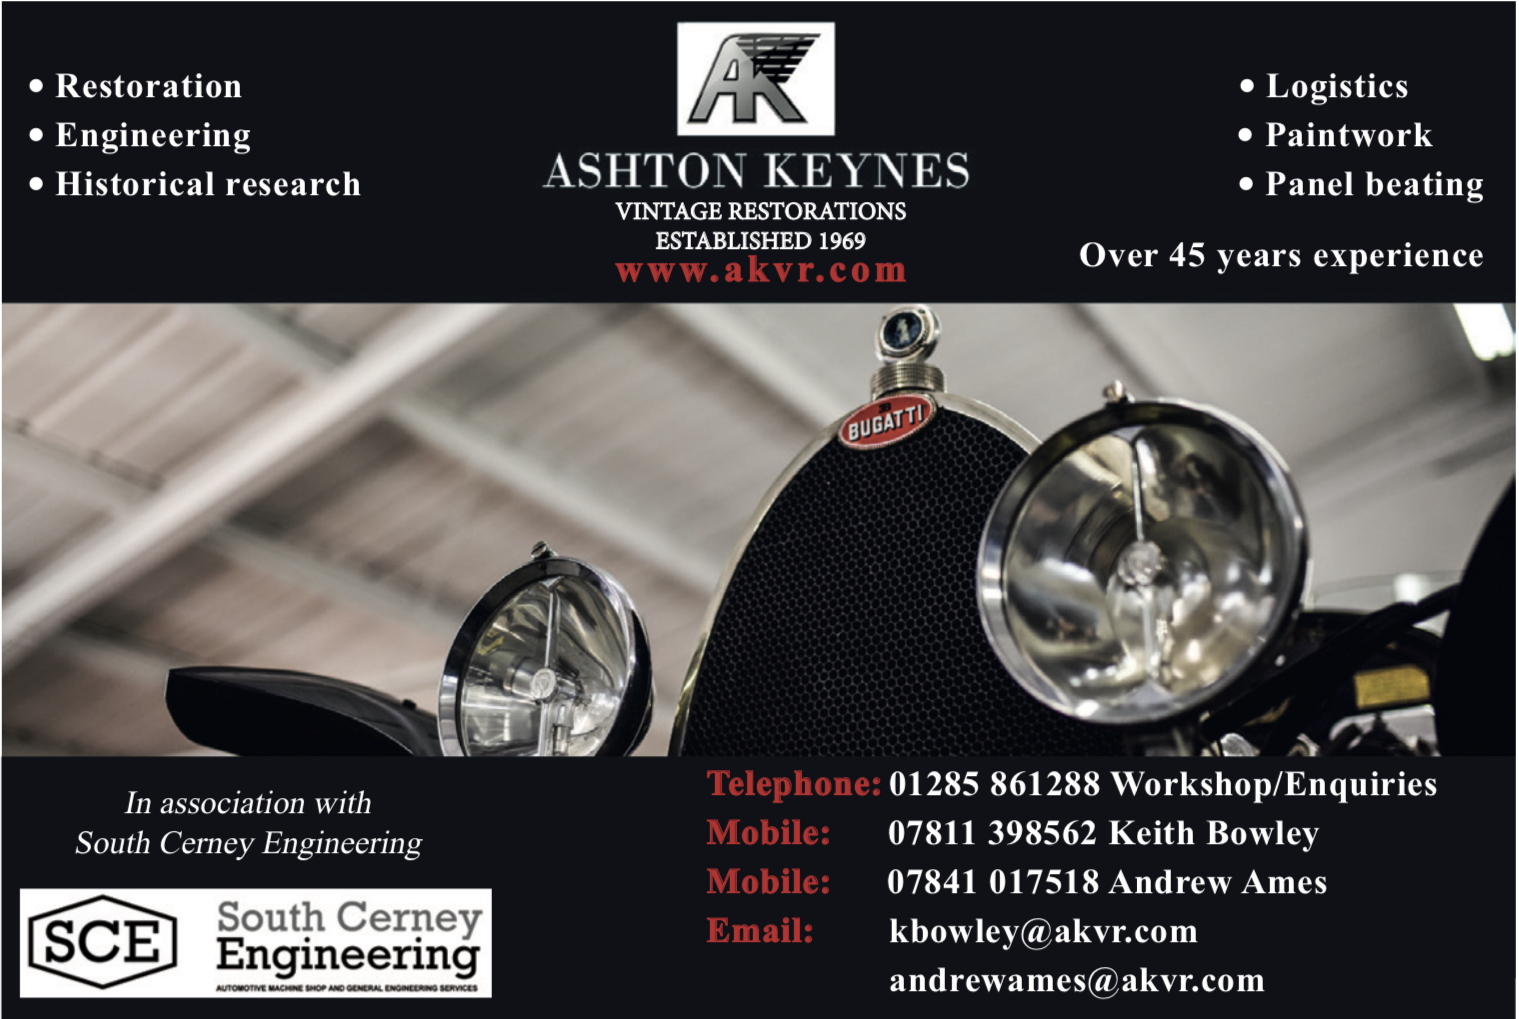 Ashton Keynes Vintage Restorations - Classic cars and Vintage Restorations engineering and historical research